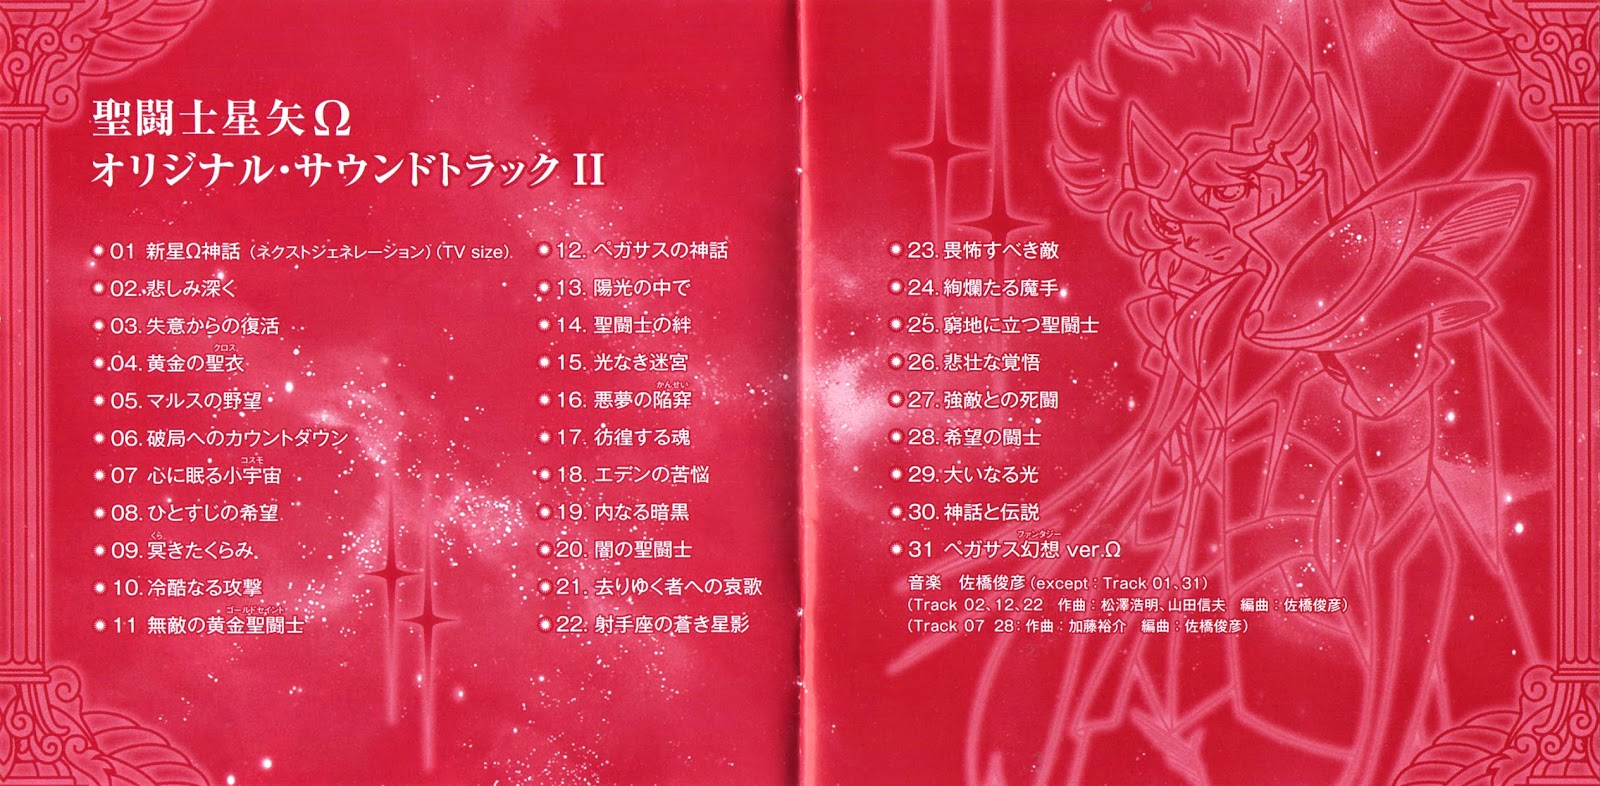 Shinsei Omega Shinwa (Next Generation) - Saint Seiya Omega Opening 2  (Lyrics) 